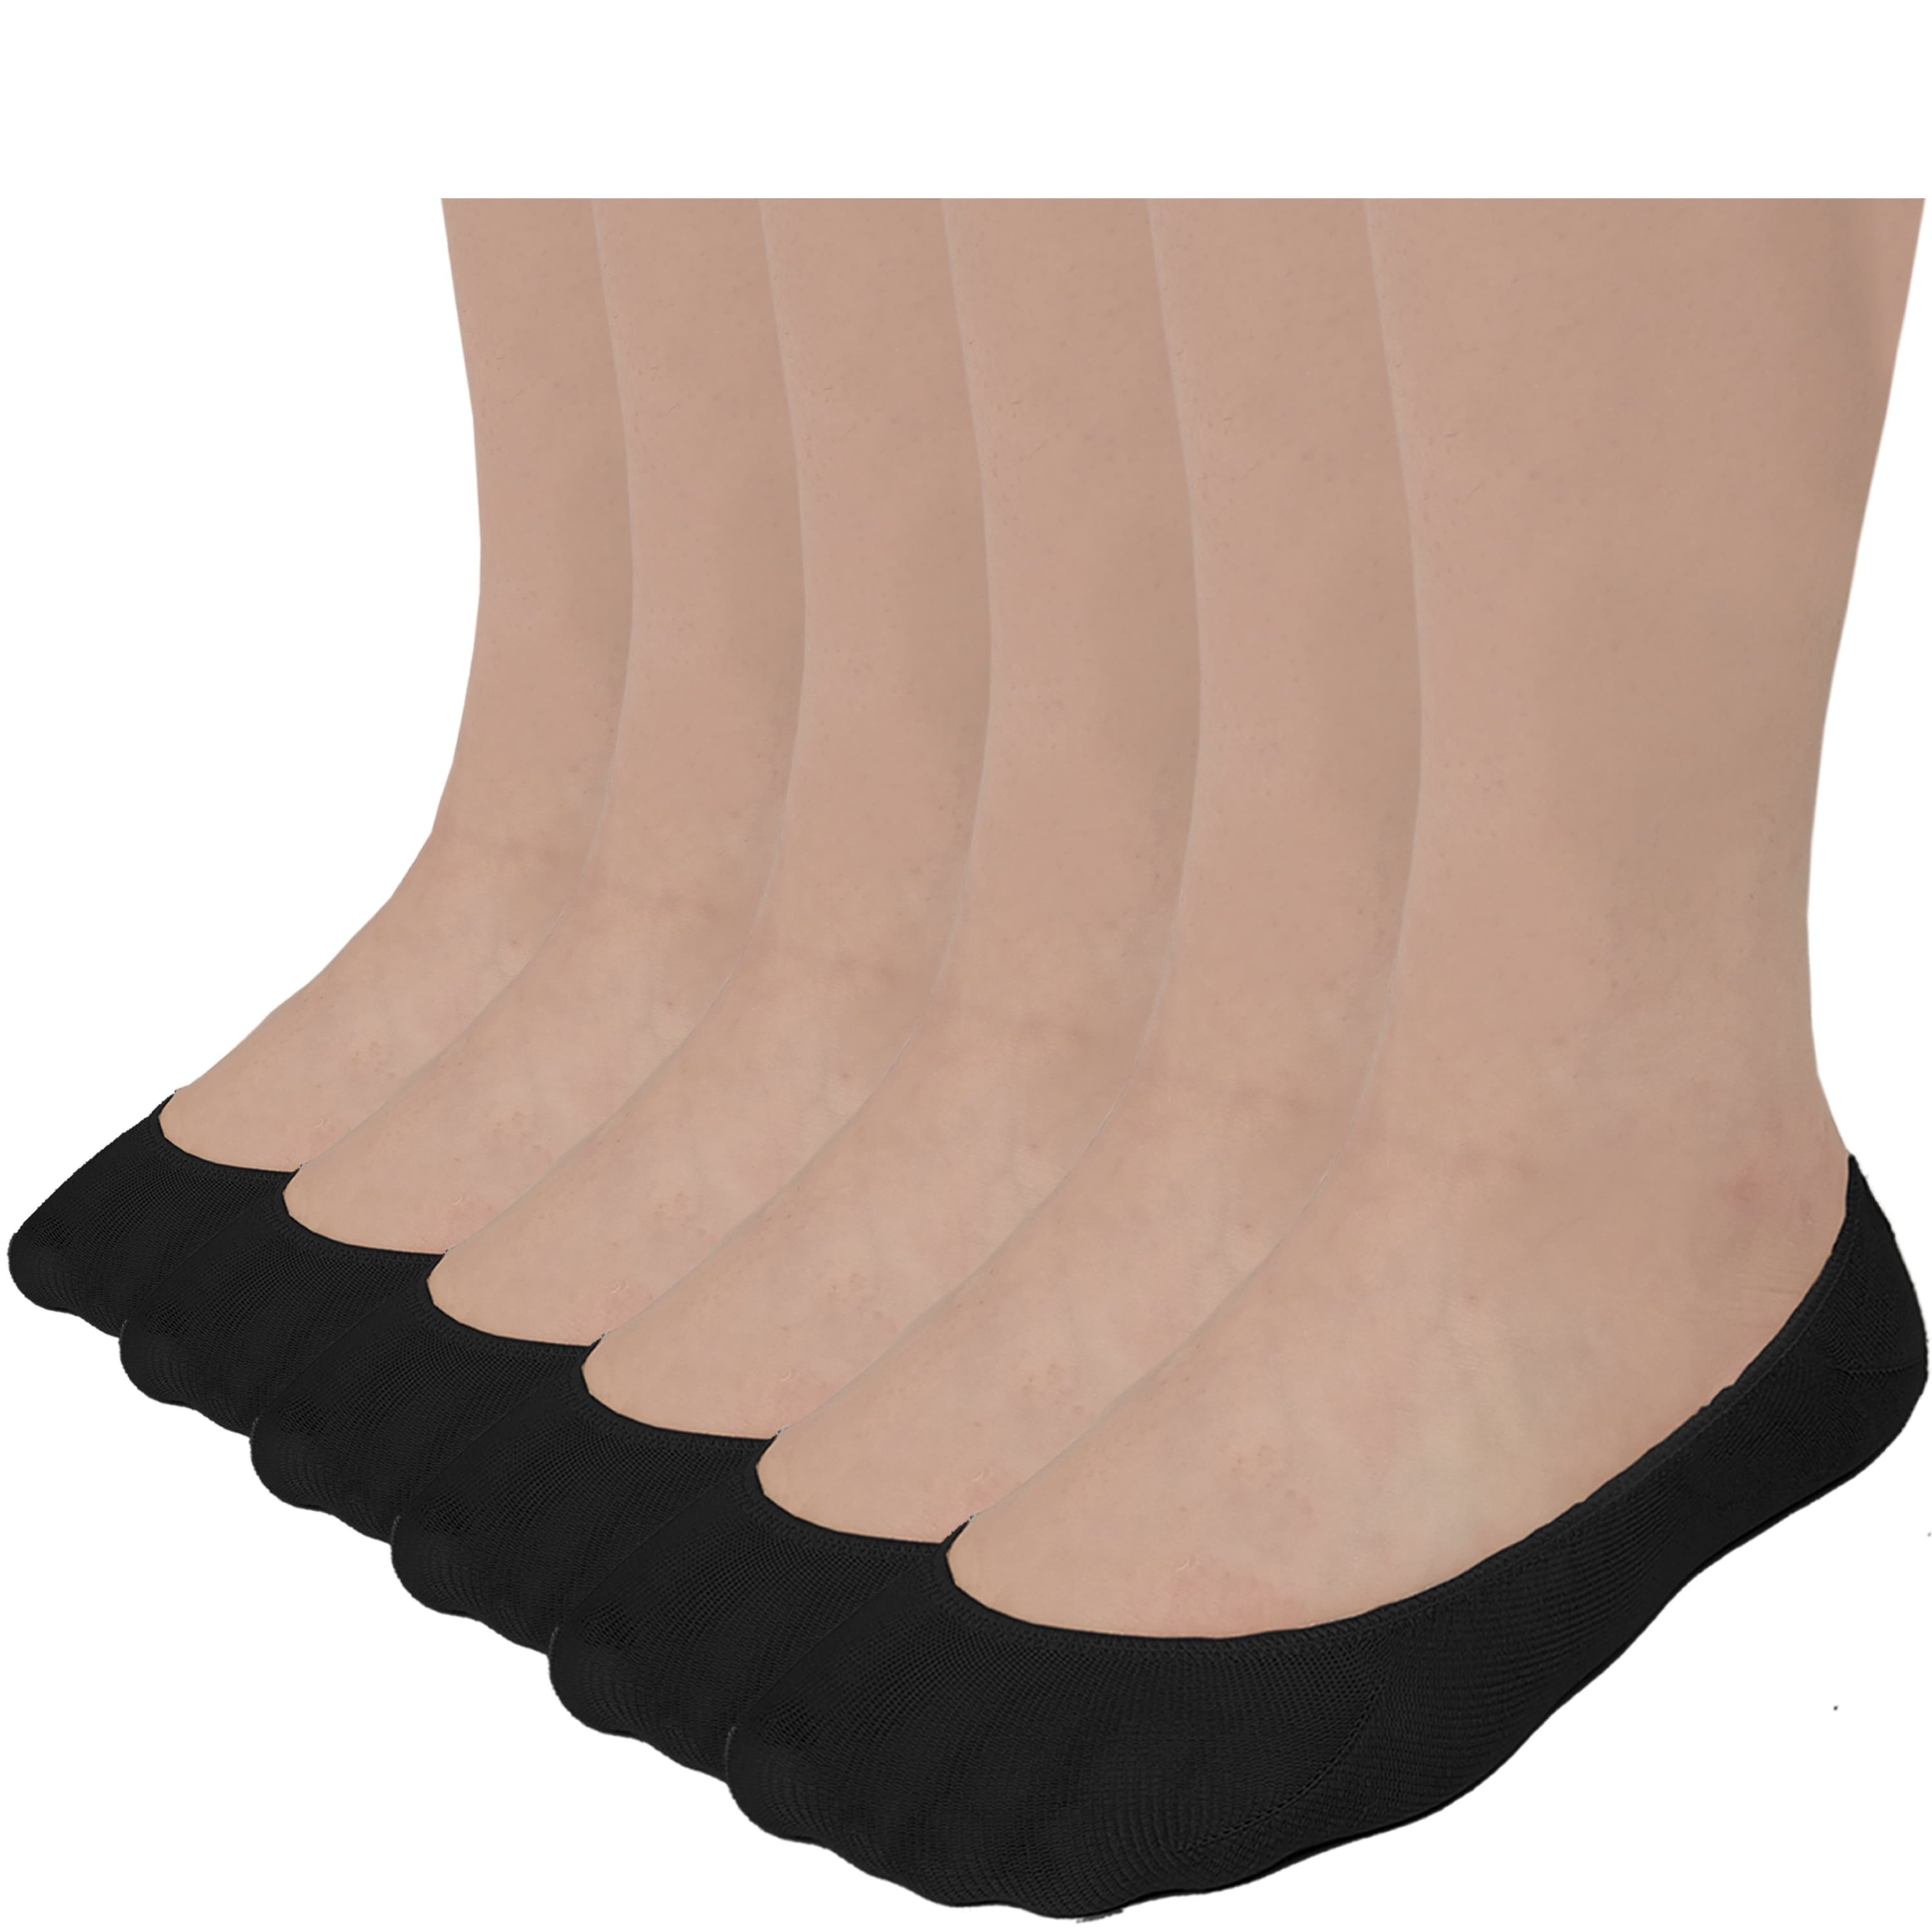 Zeltauto 6 Pairs Invisible Socks Women Cotton No Show Liner Socks Non Slip for Plimsolls